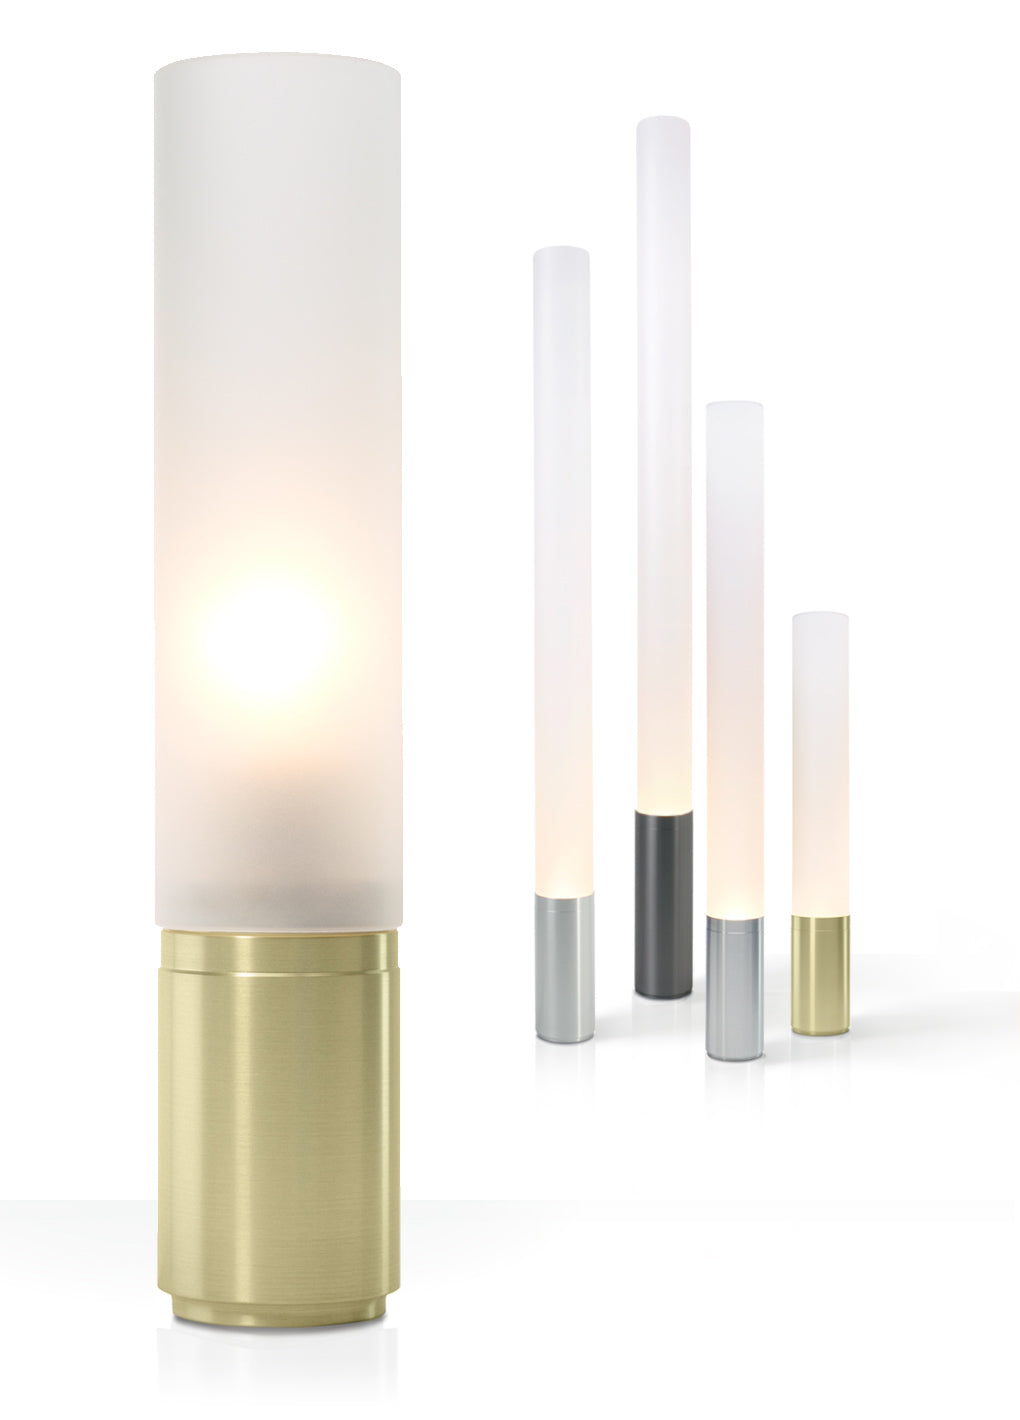 Pablo Designs Elise Table Lamp - LoftModern 27